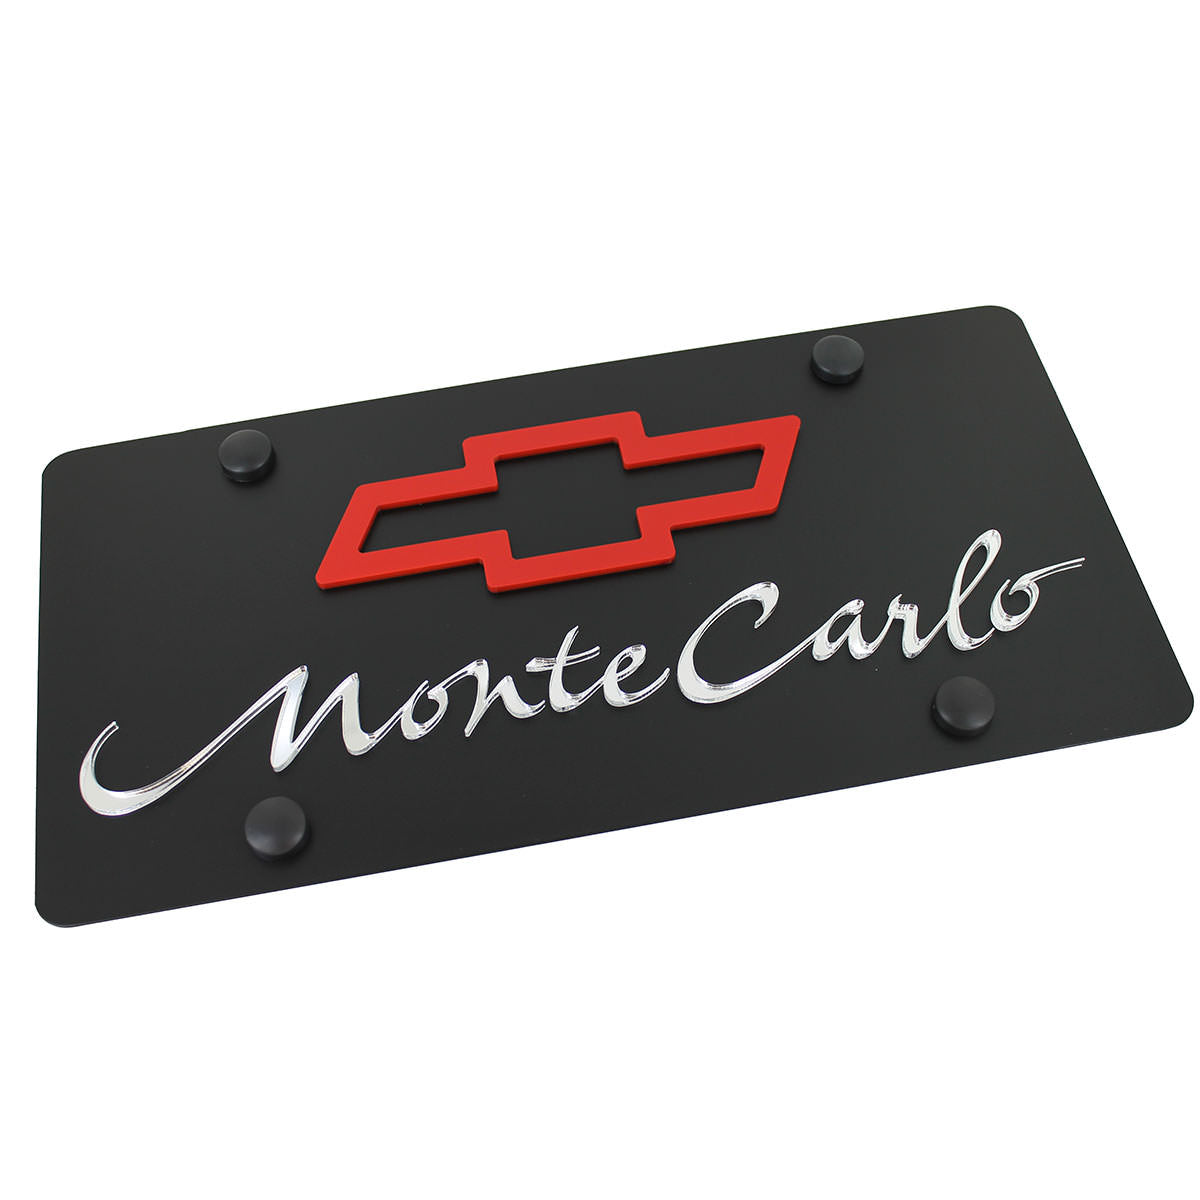 Chevy Monte Carlo License Plate